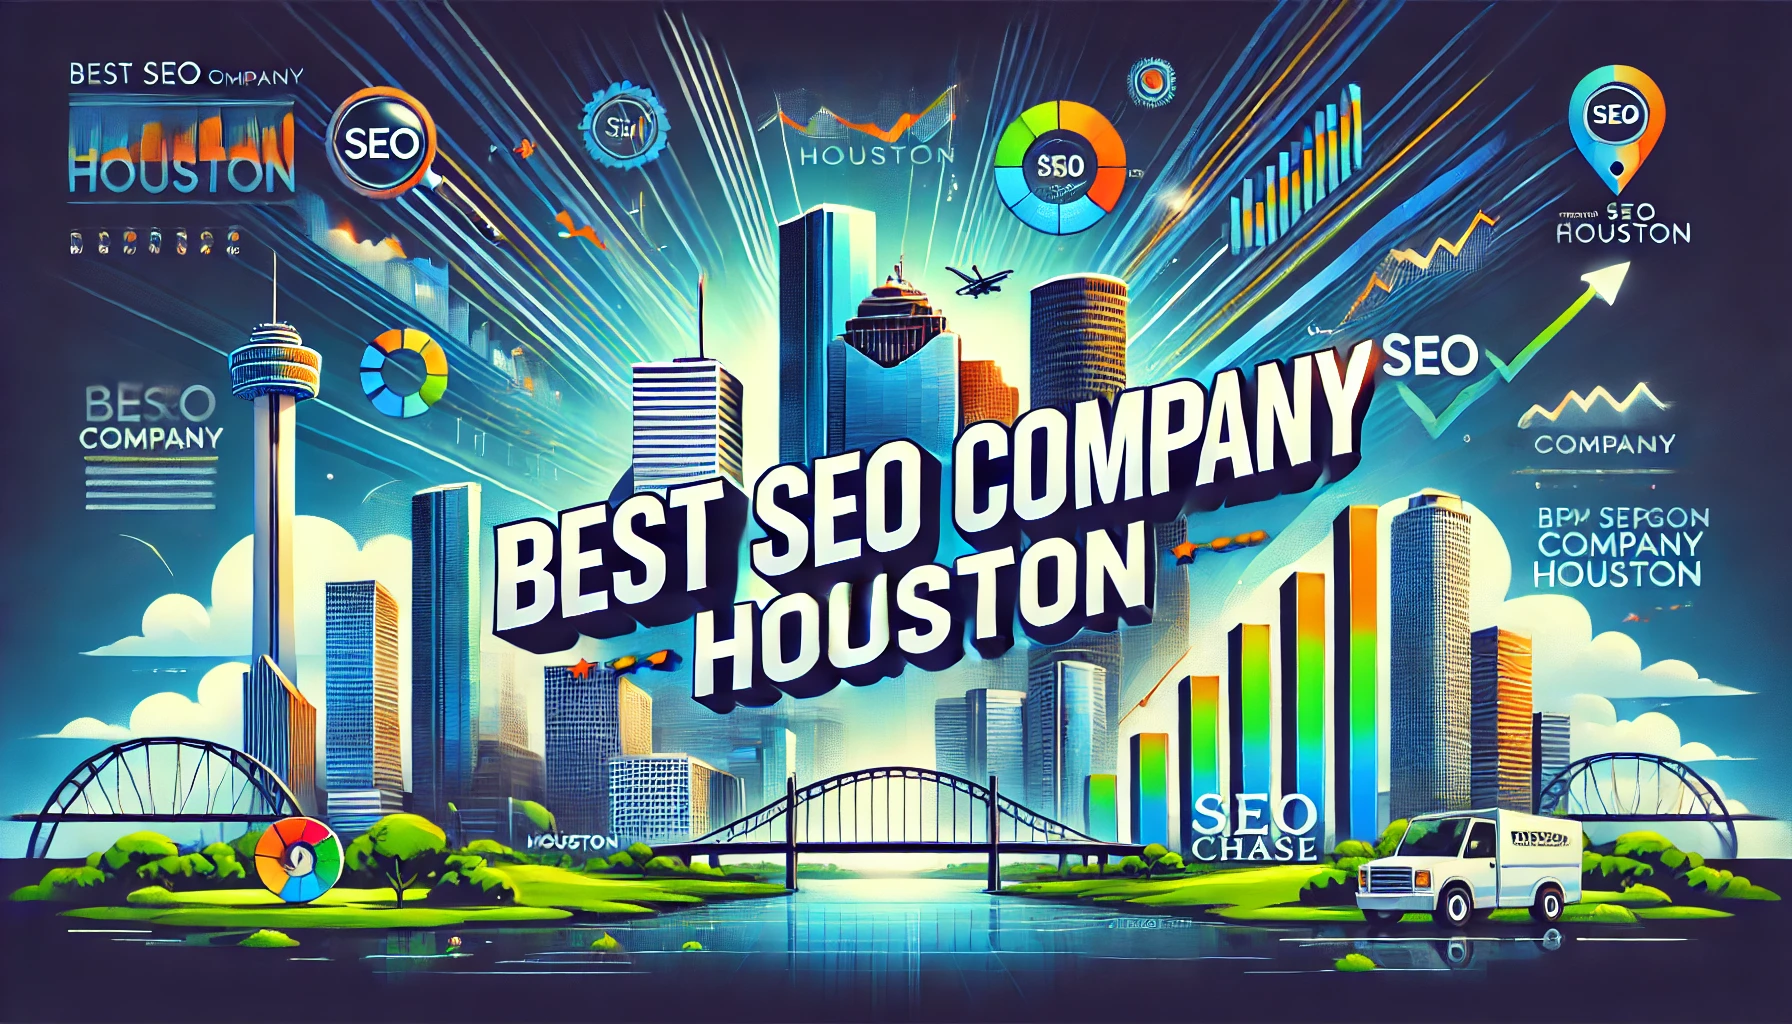 Best SEO Company Houston